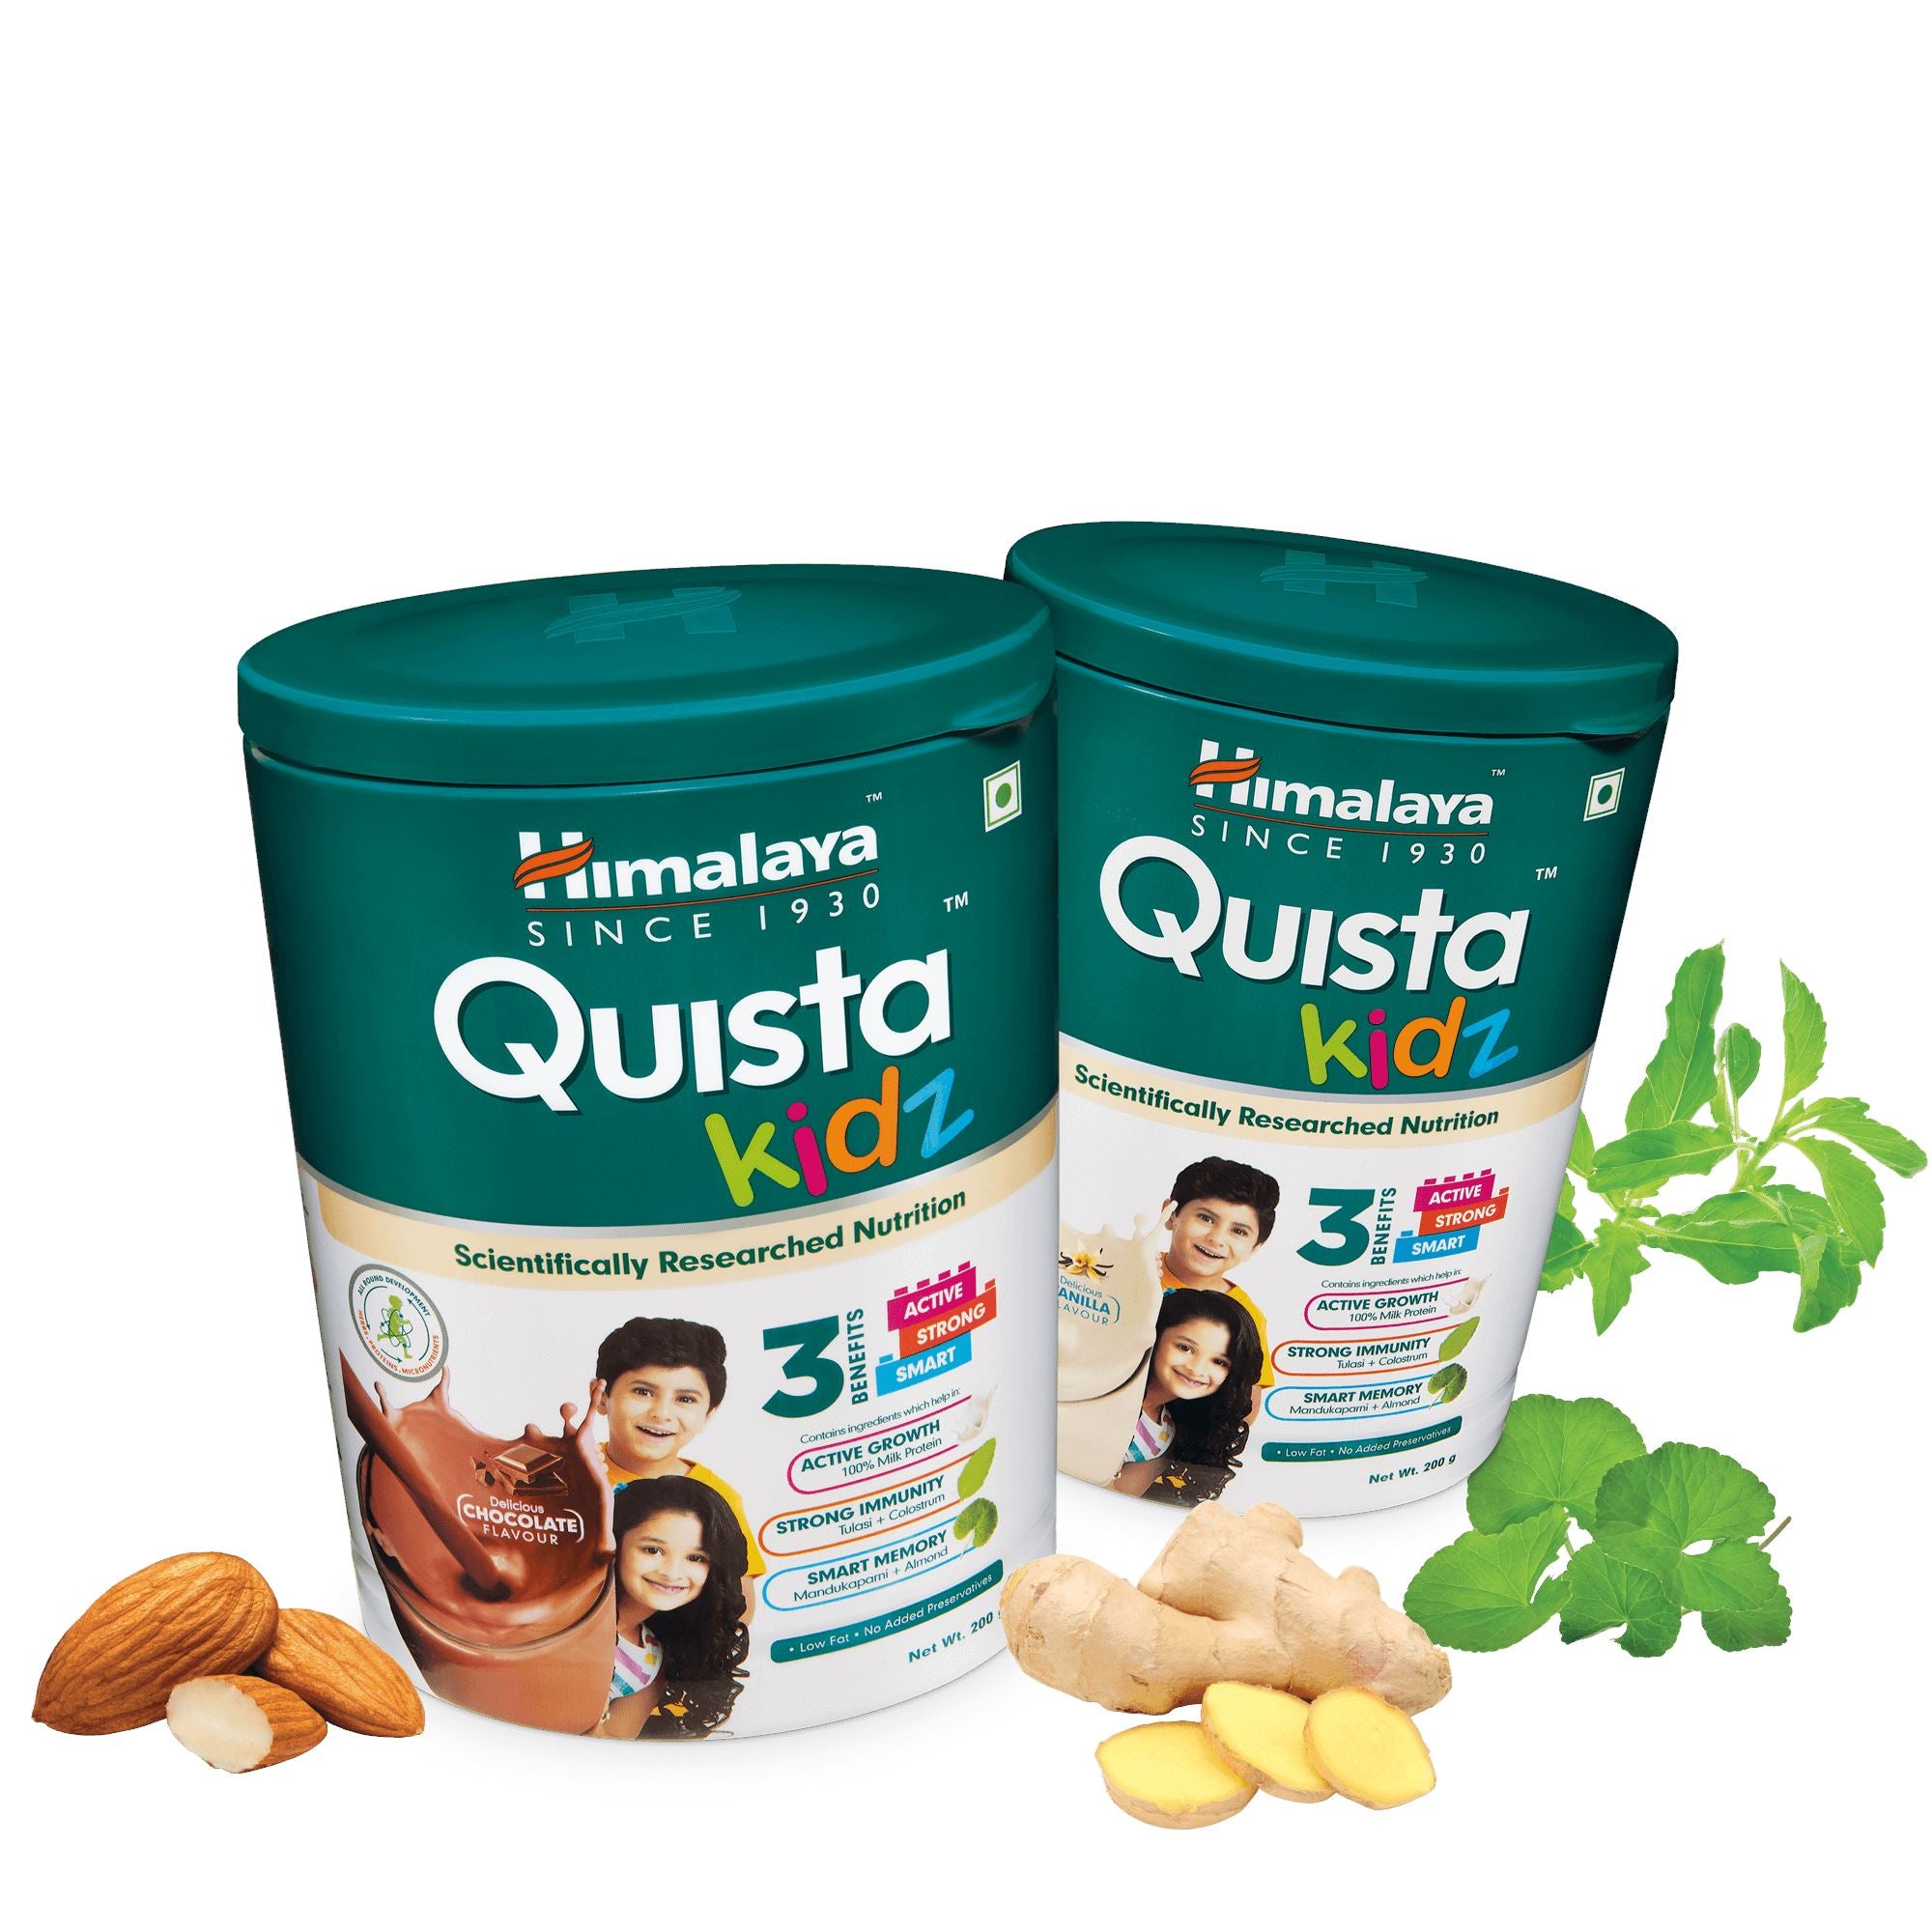 Himalaya Quista kidz - Nutrition drink for kids